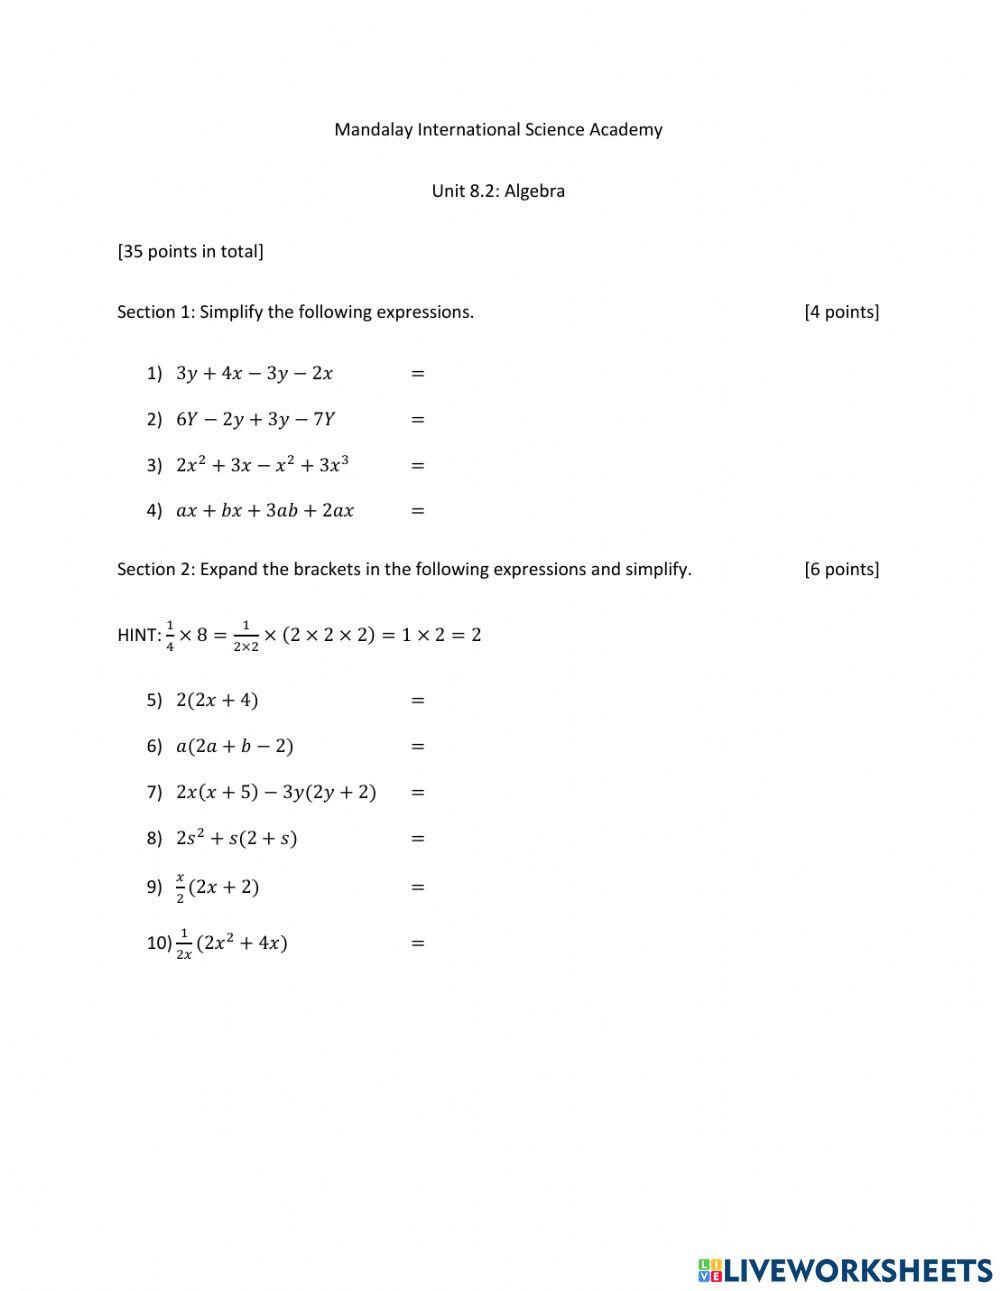 Unit 8.2 Algebra Quiz